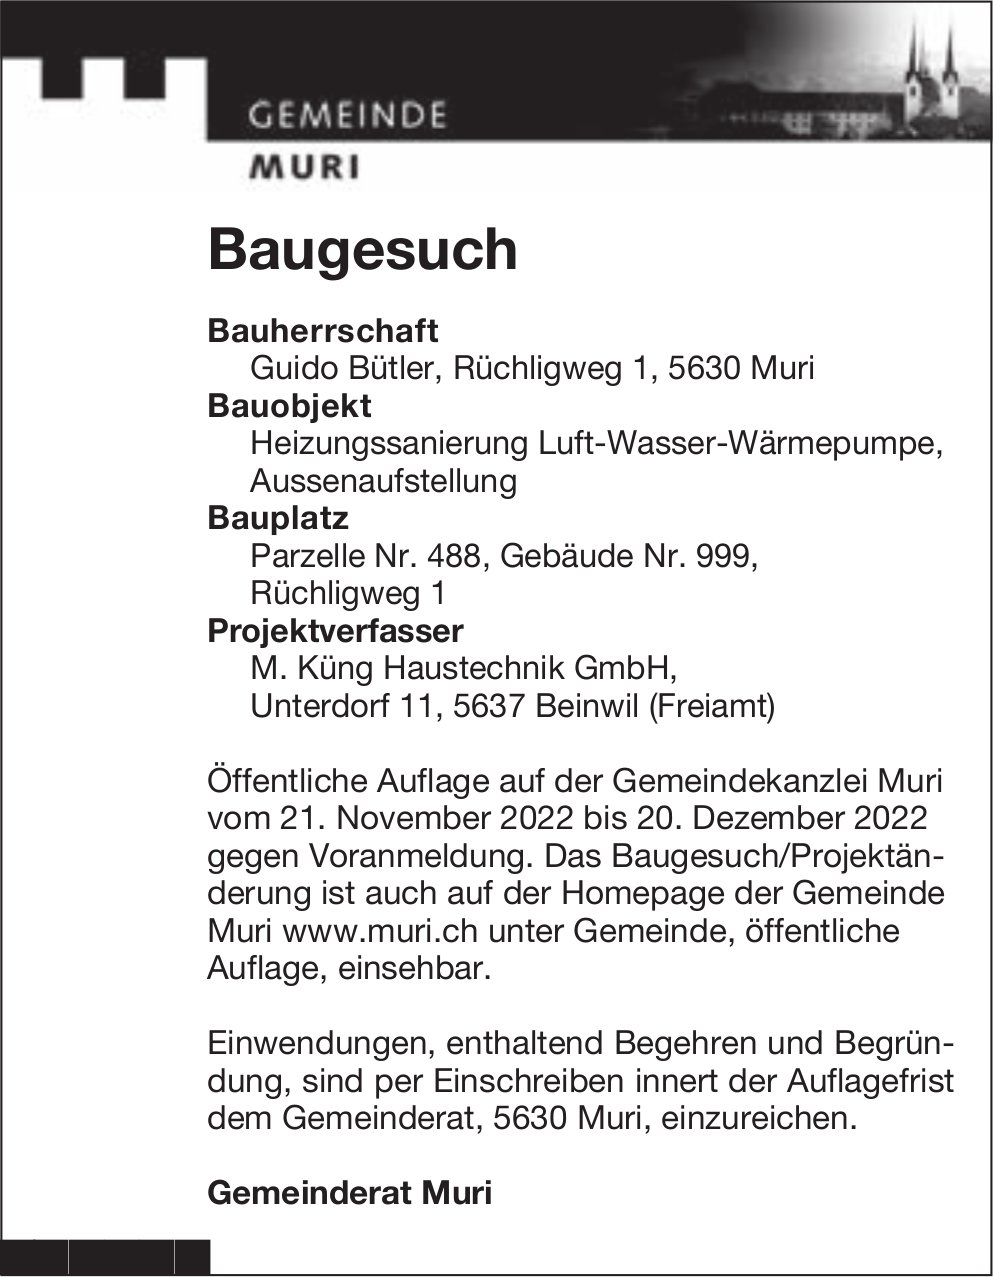 Baugesuche, Muri - Guido Bütler